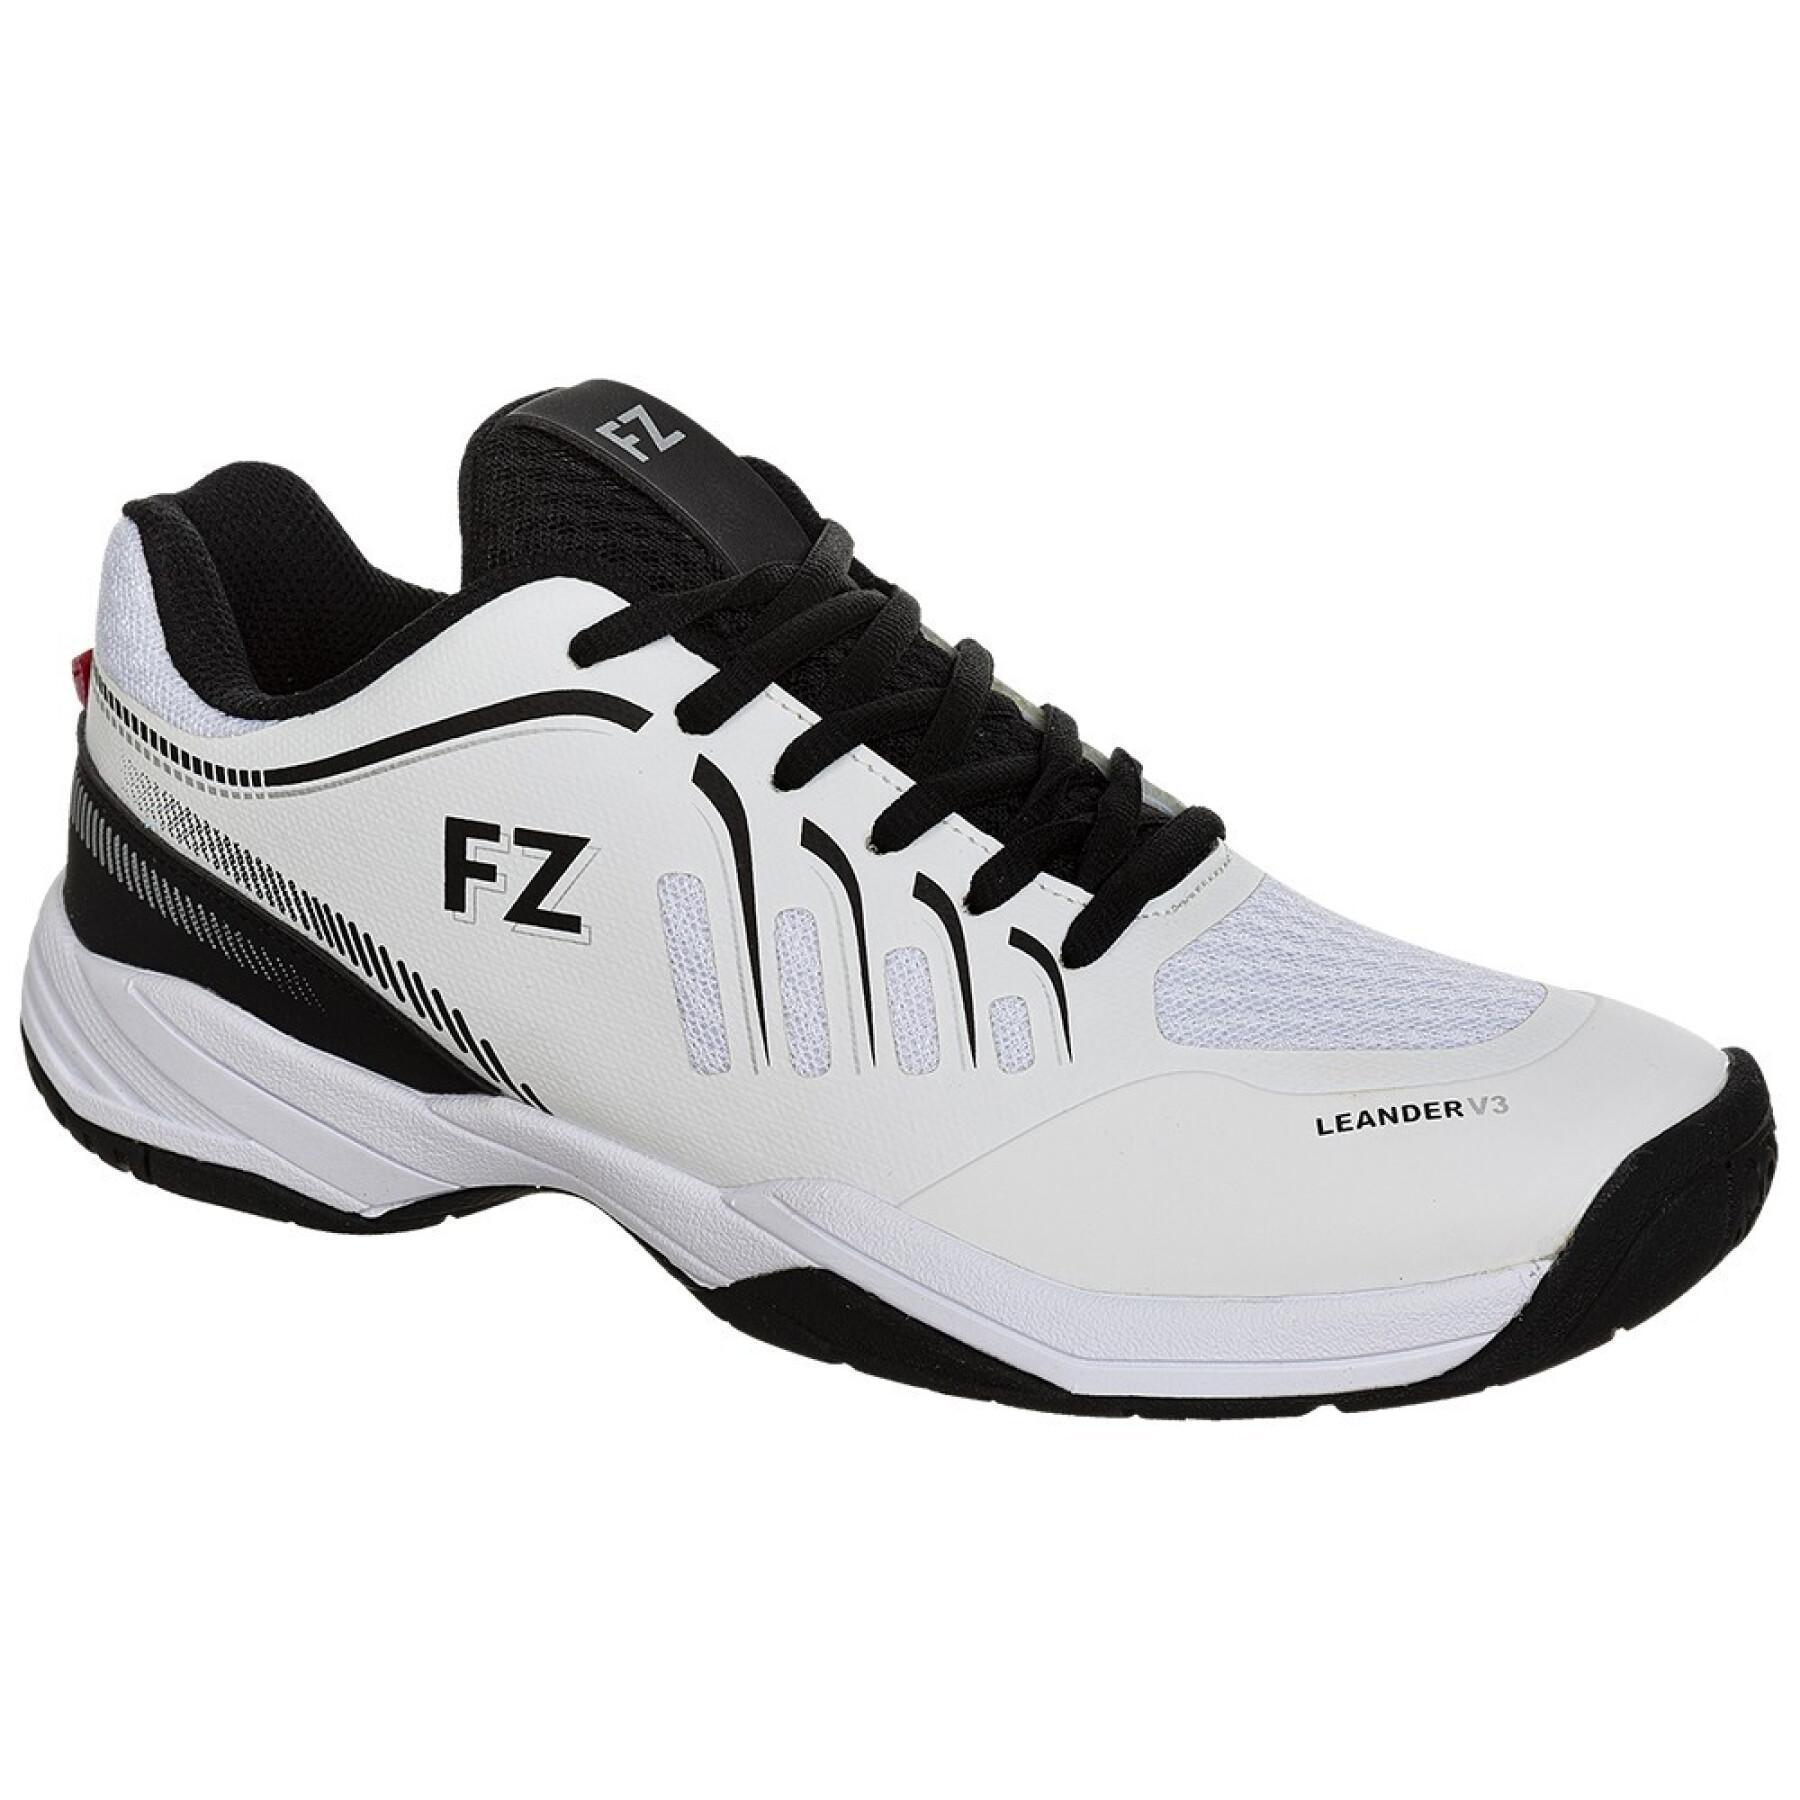 Badmintonschuhe FZ Forza Leander V3 1002